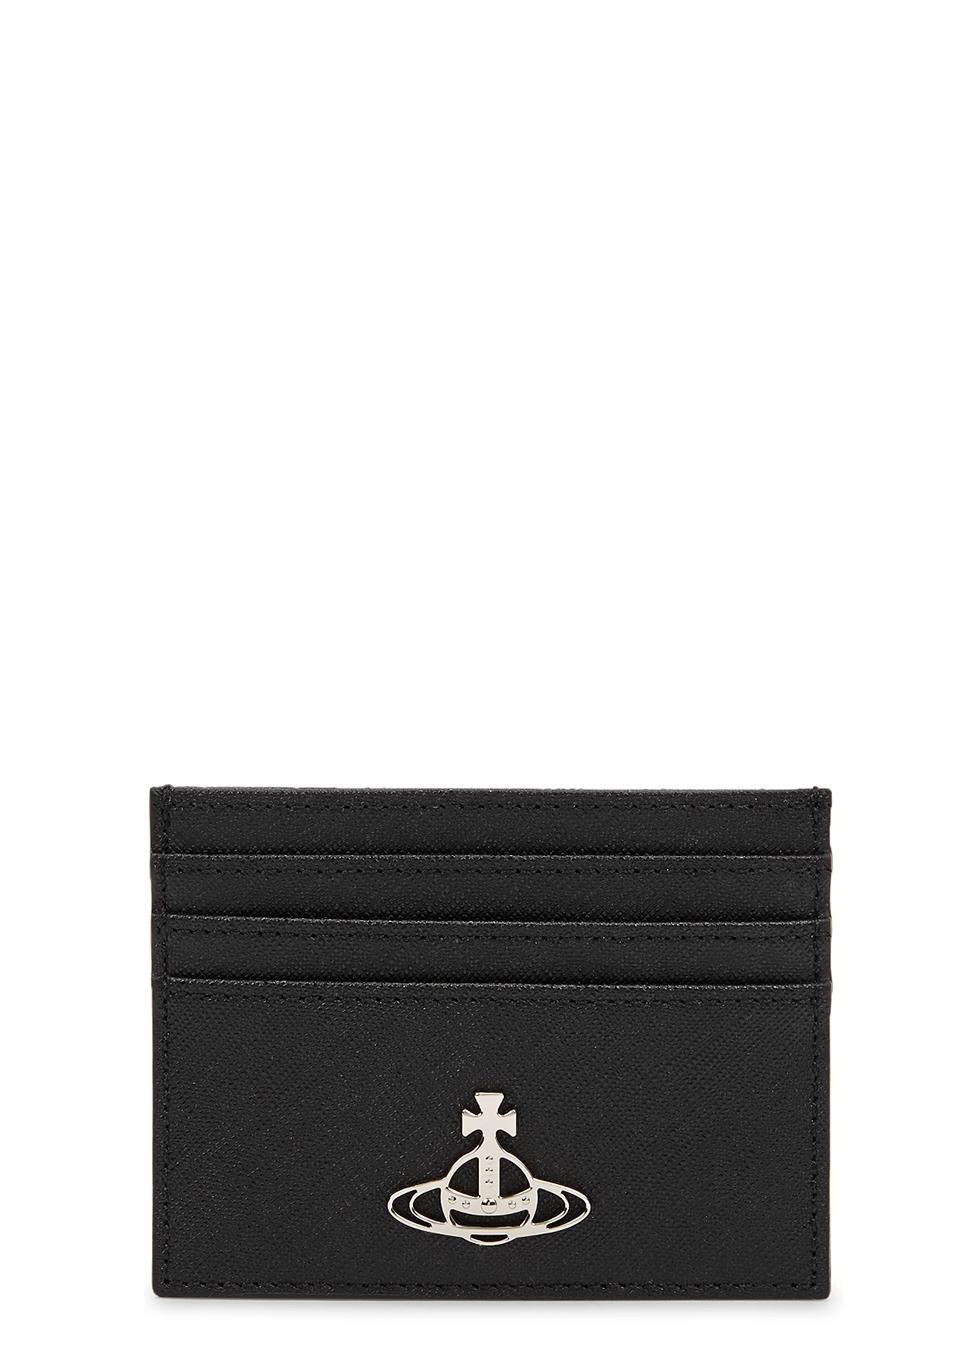 Vivienne Westwood Black Leather Card Holder | Lyst